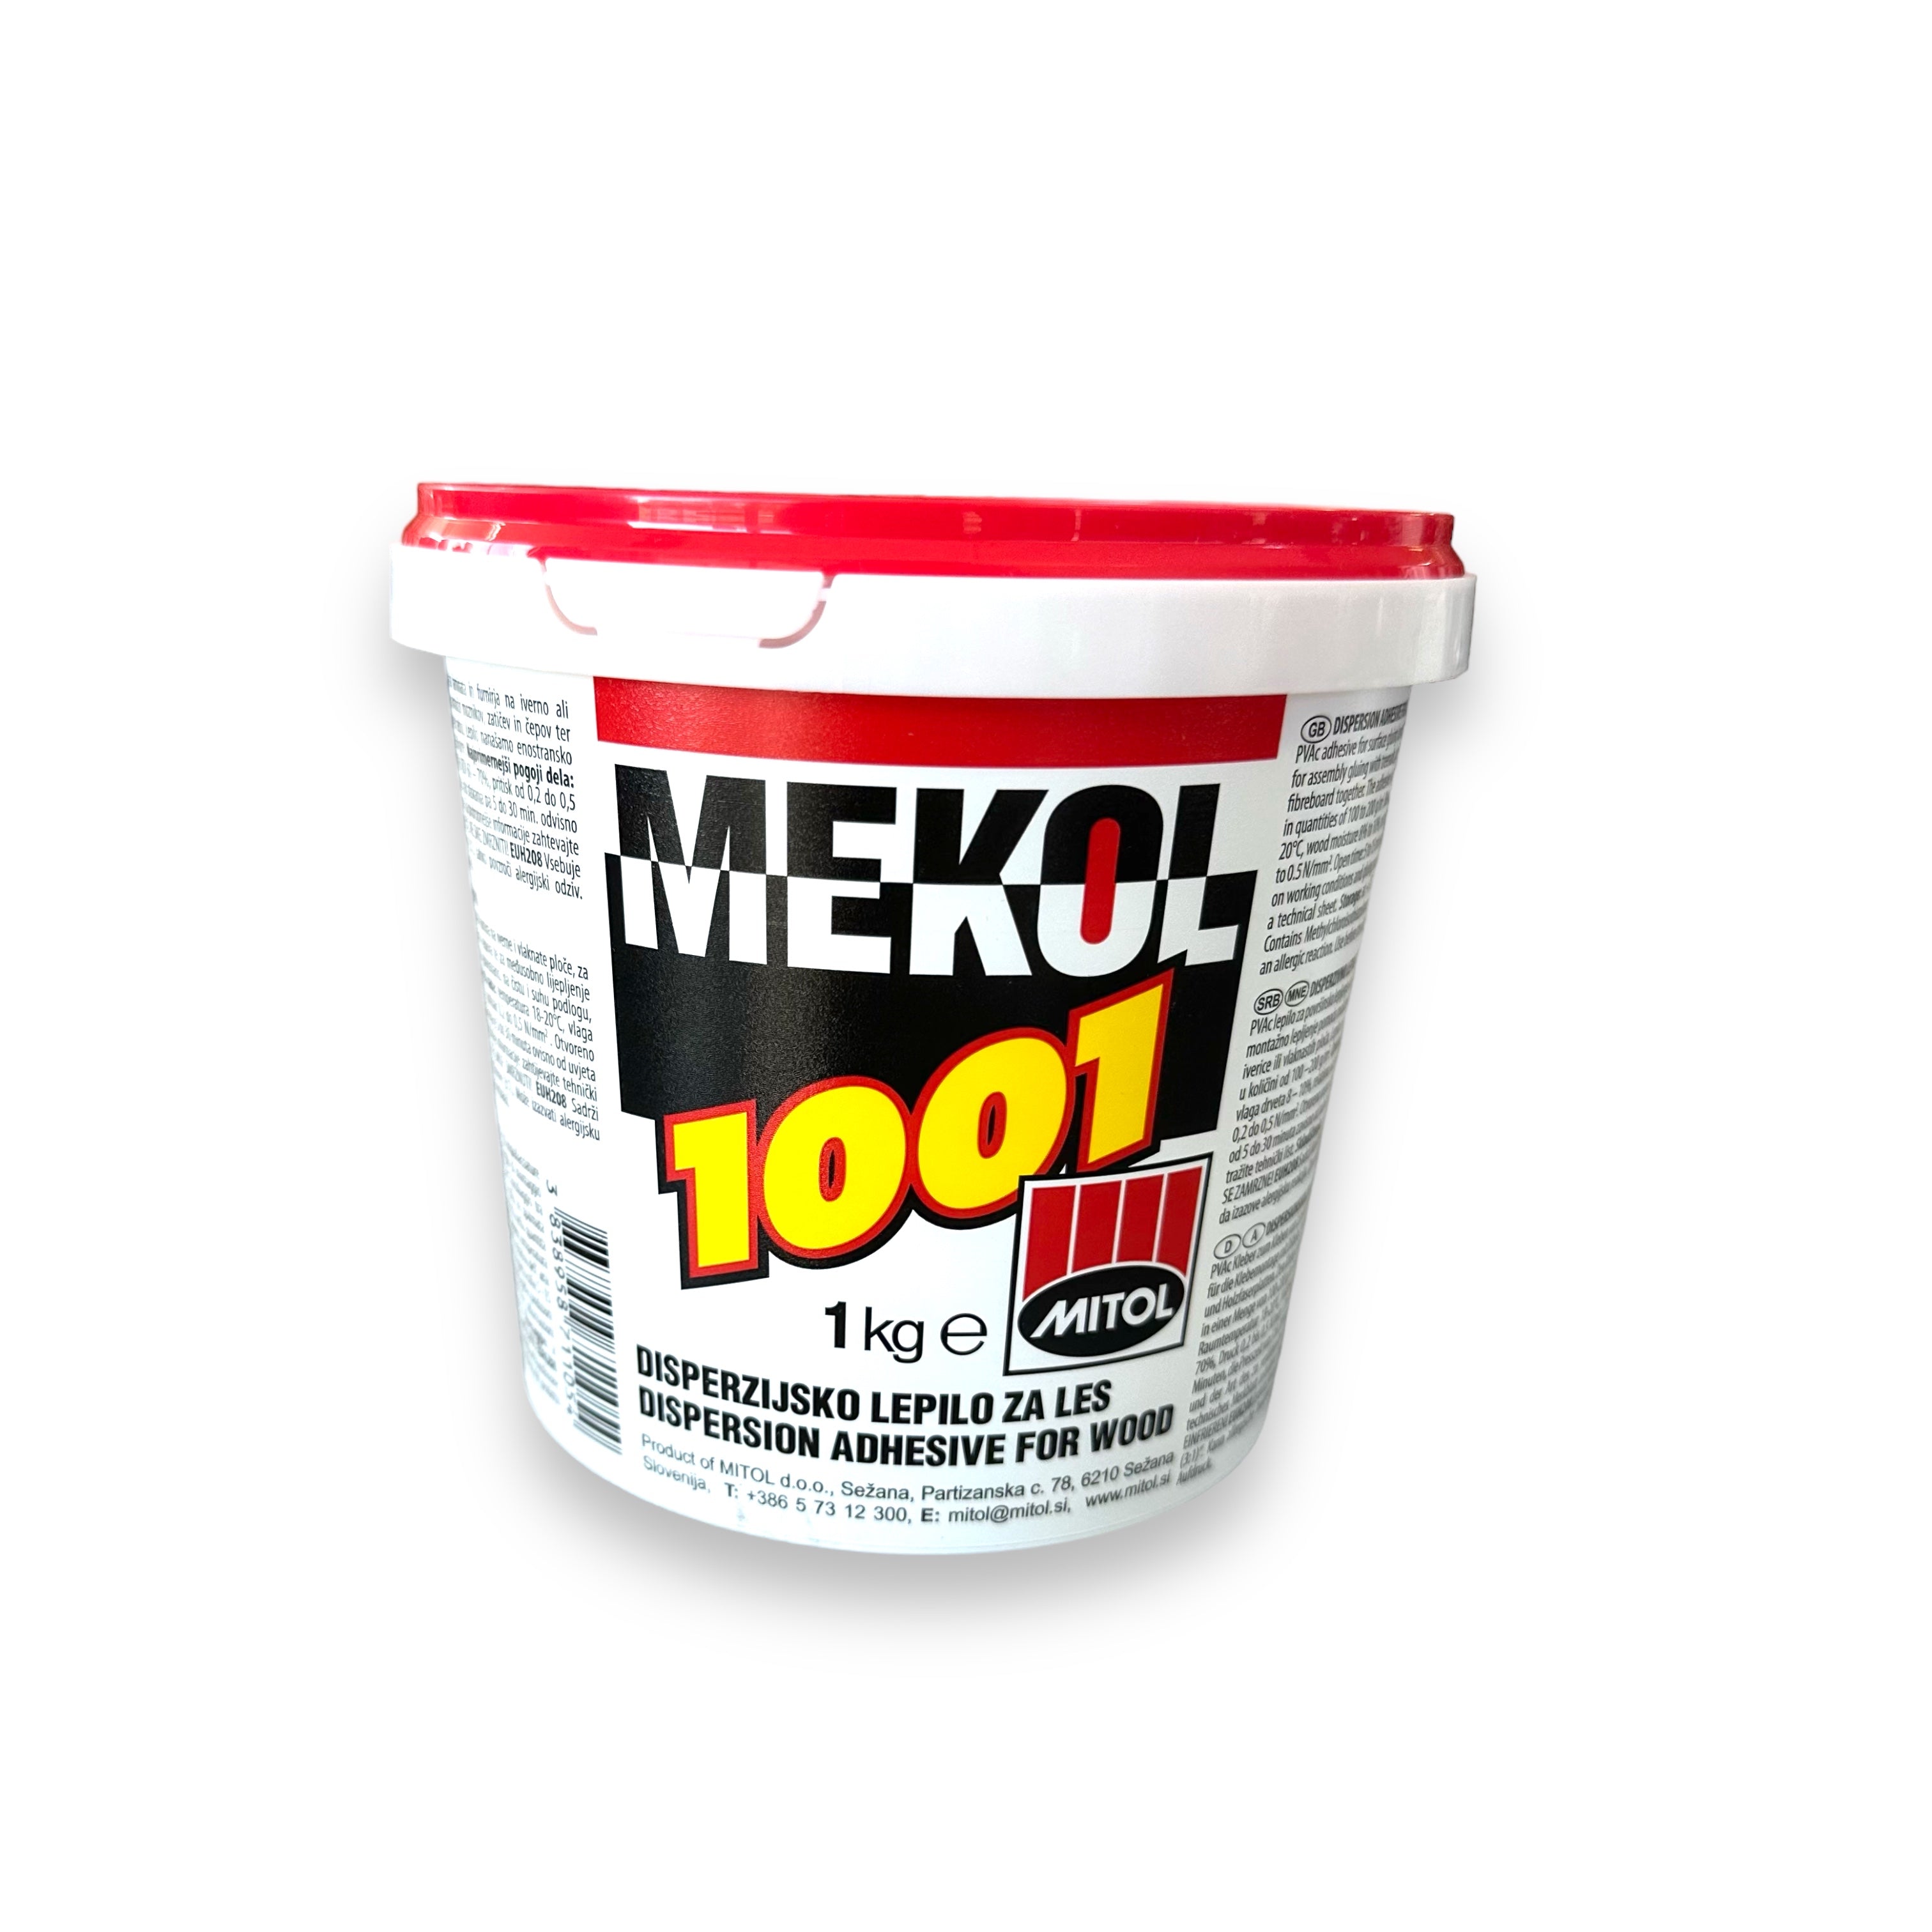 Glue for Wood Mekol 1001 1kg